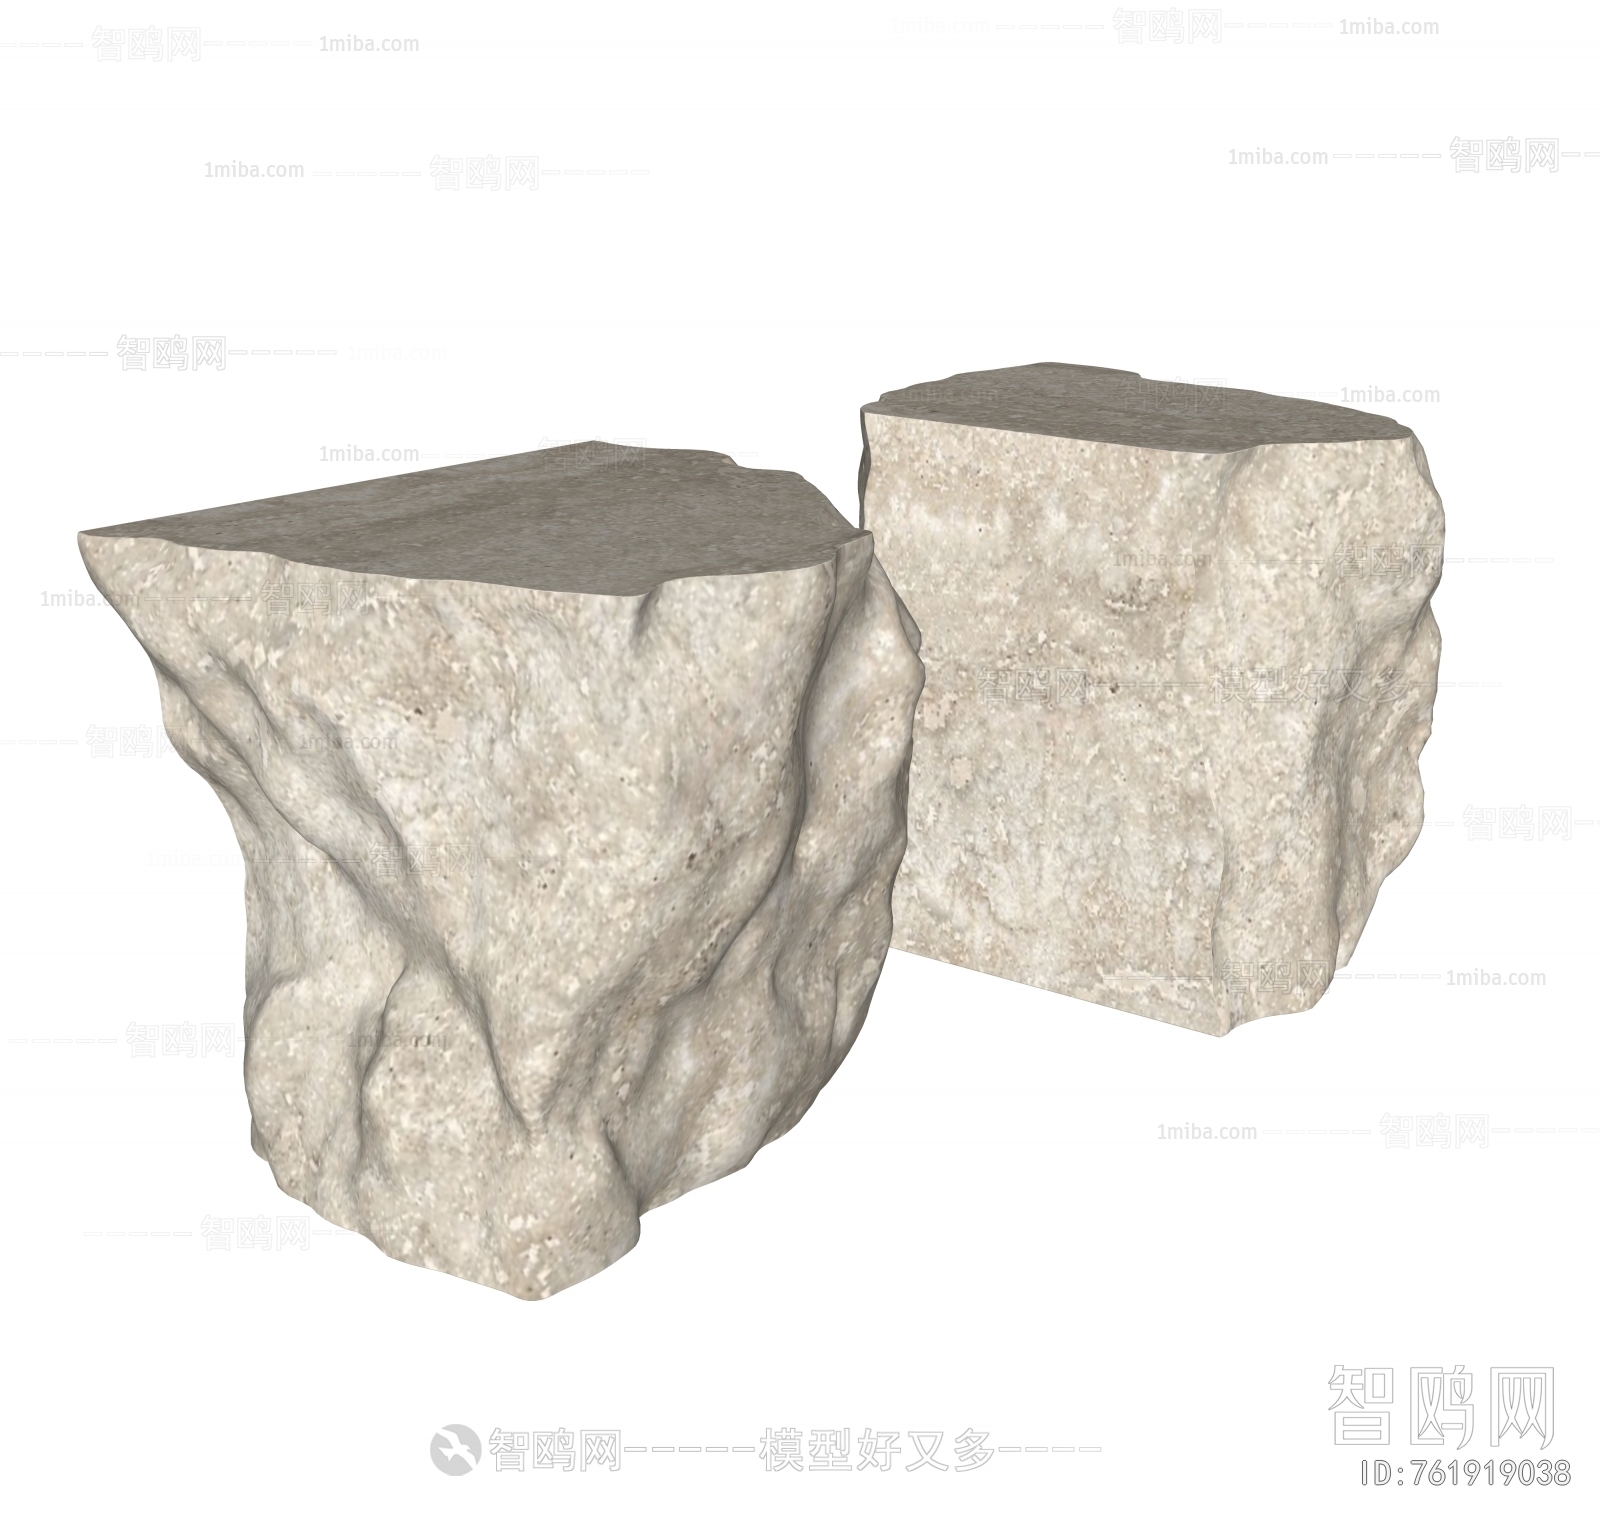 Modern Stone